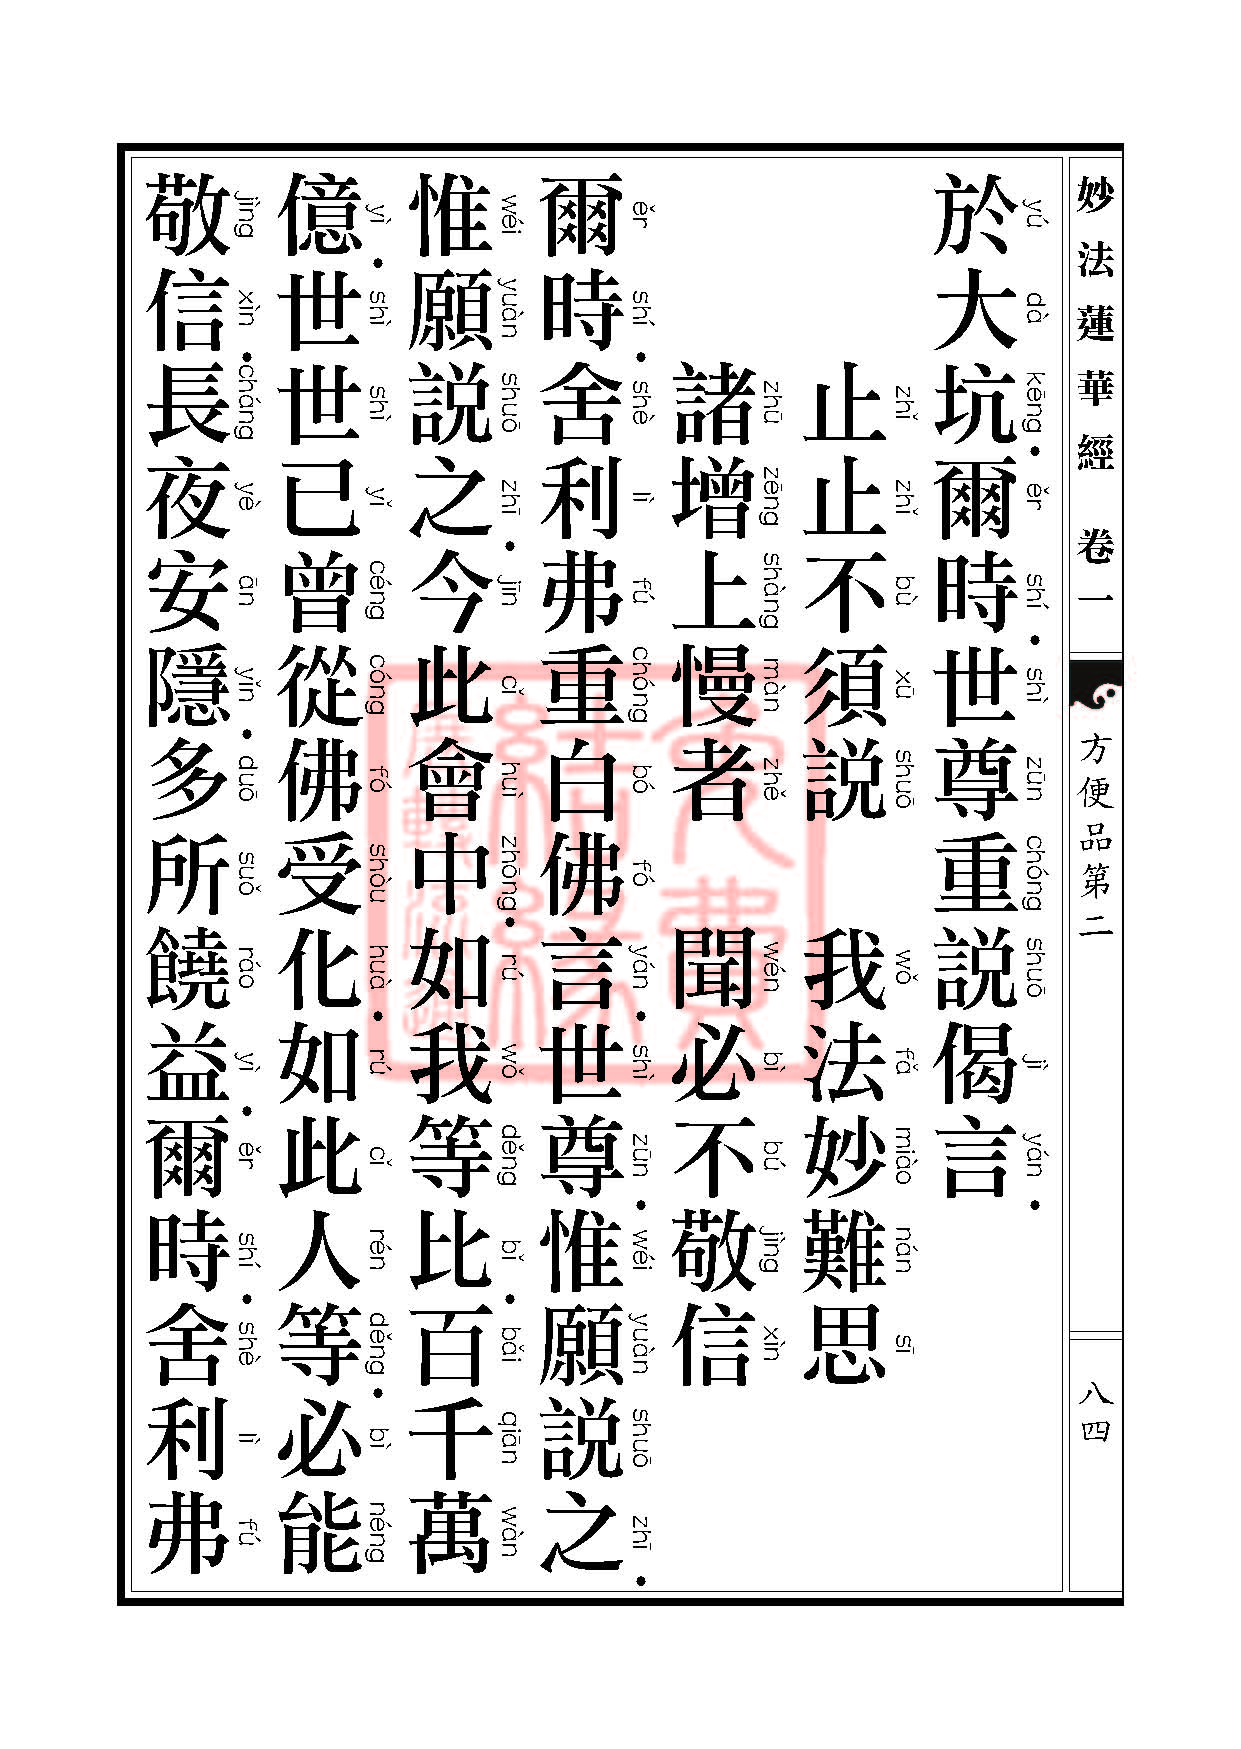 Book_FHJ_HK-A6-PY_Web_页面_084.jpg